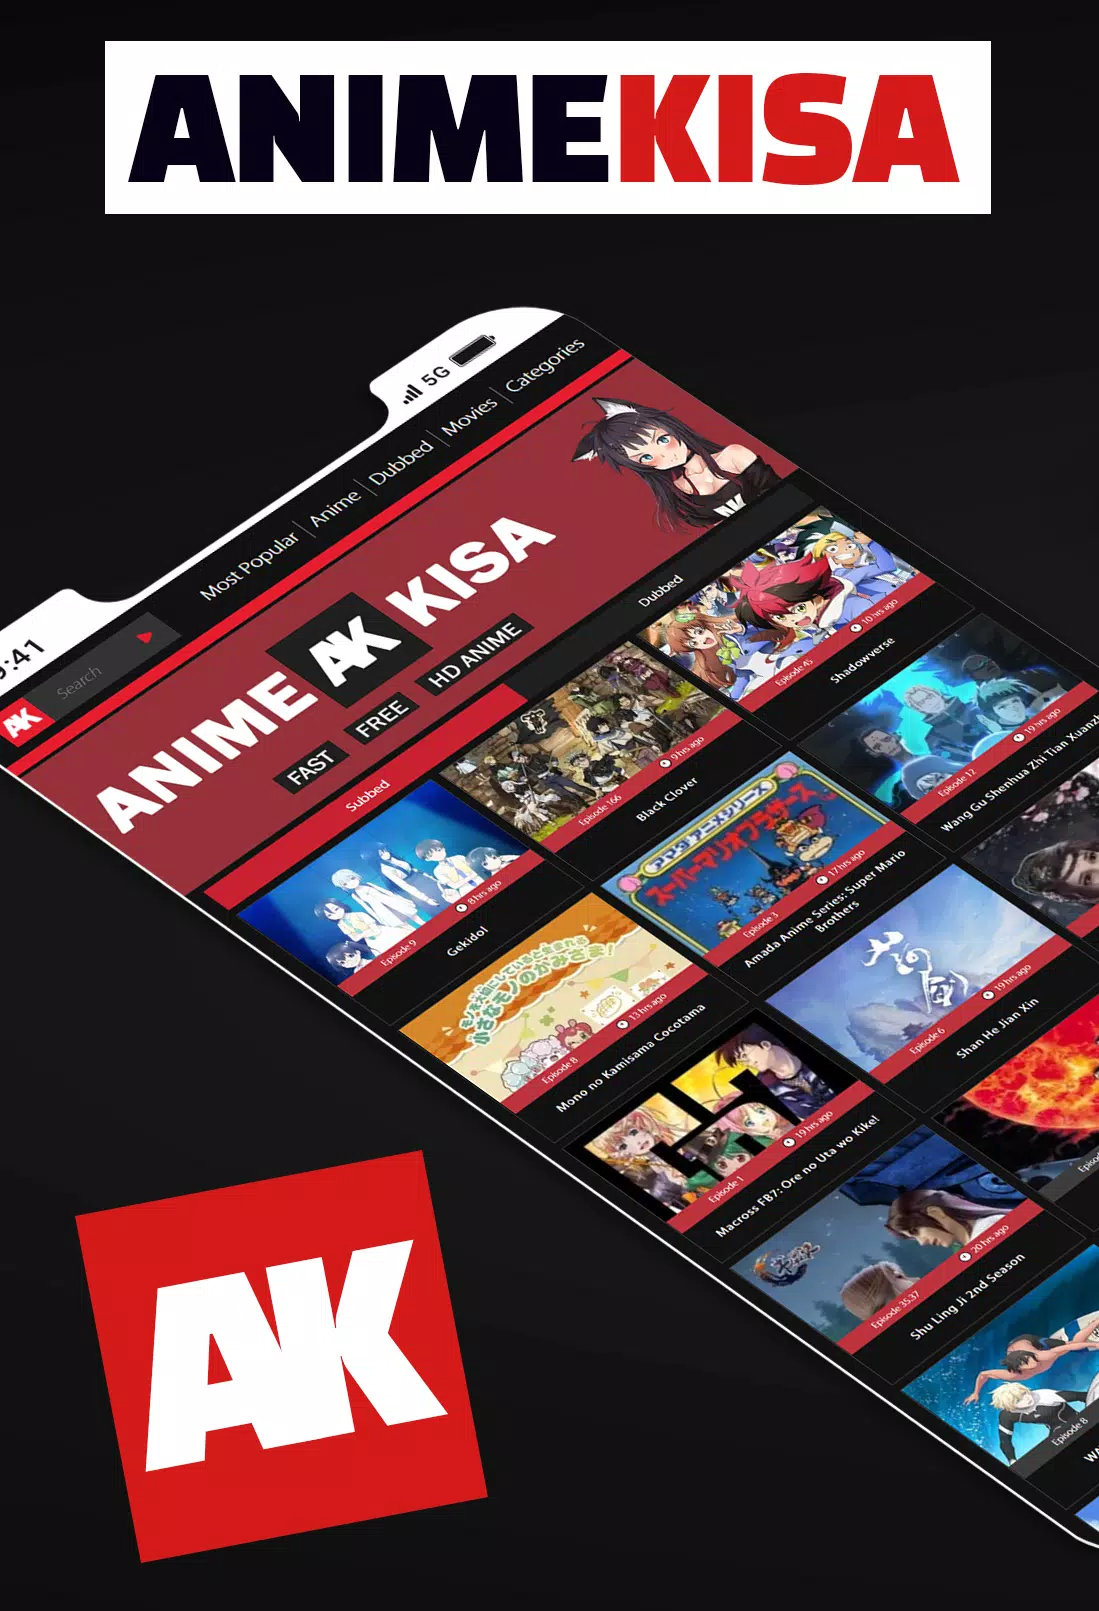 Watch Free Anime HD APK apk 8.2 - download free apk from APKSum